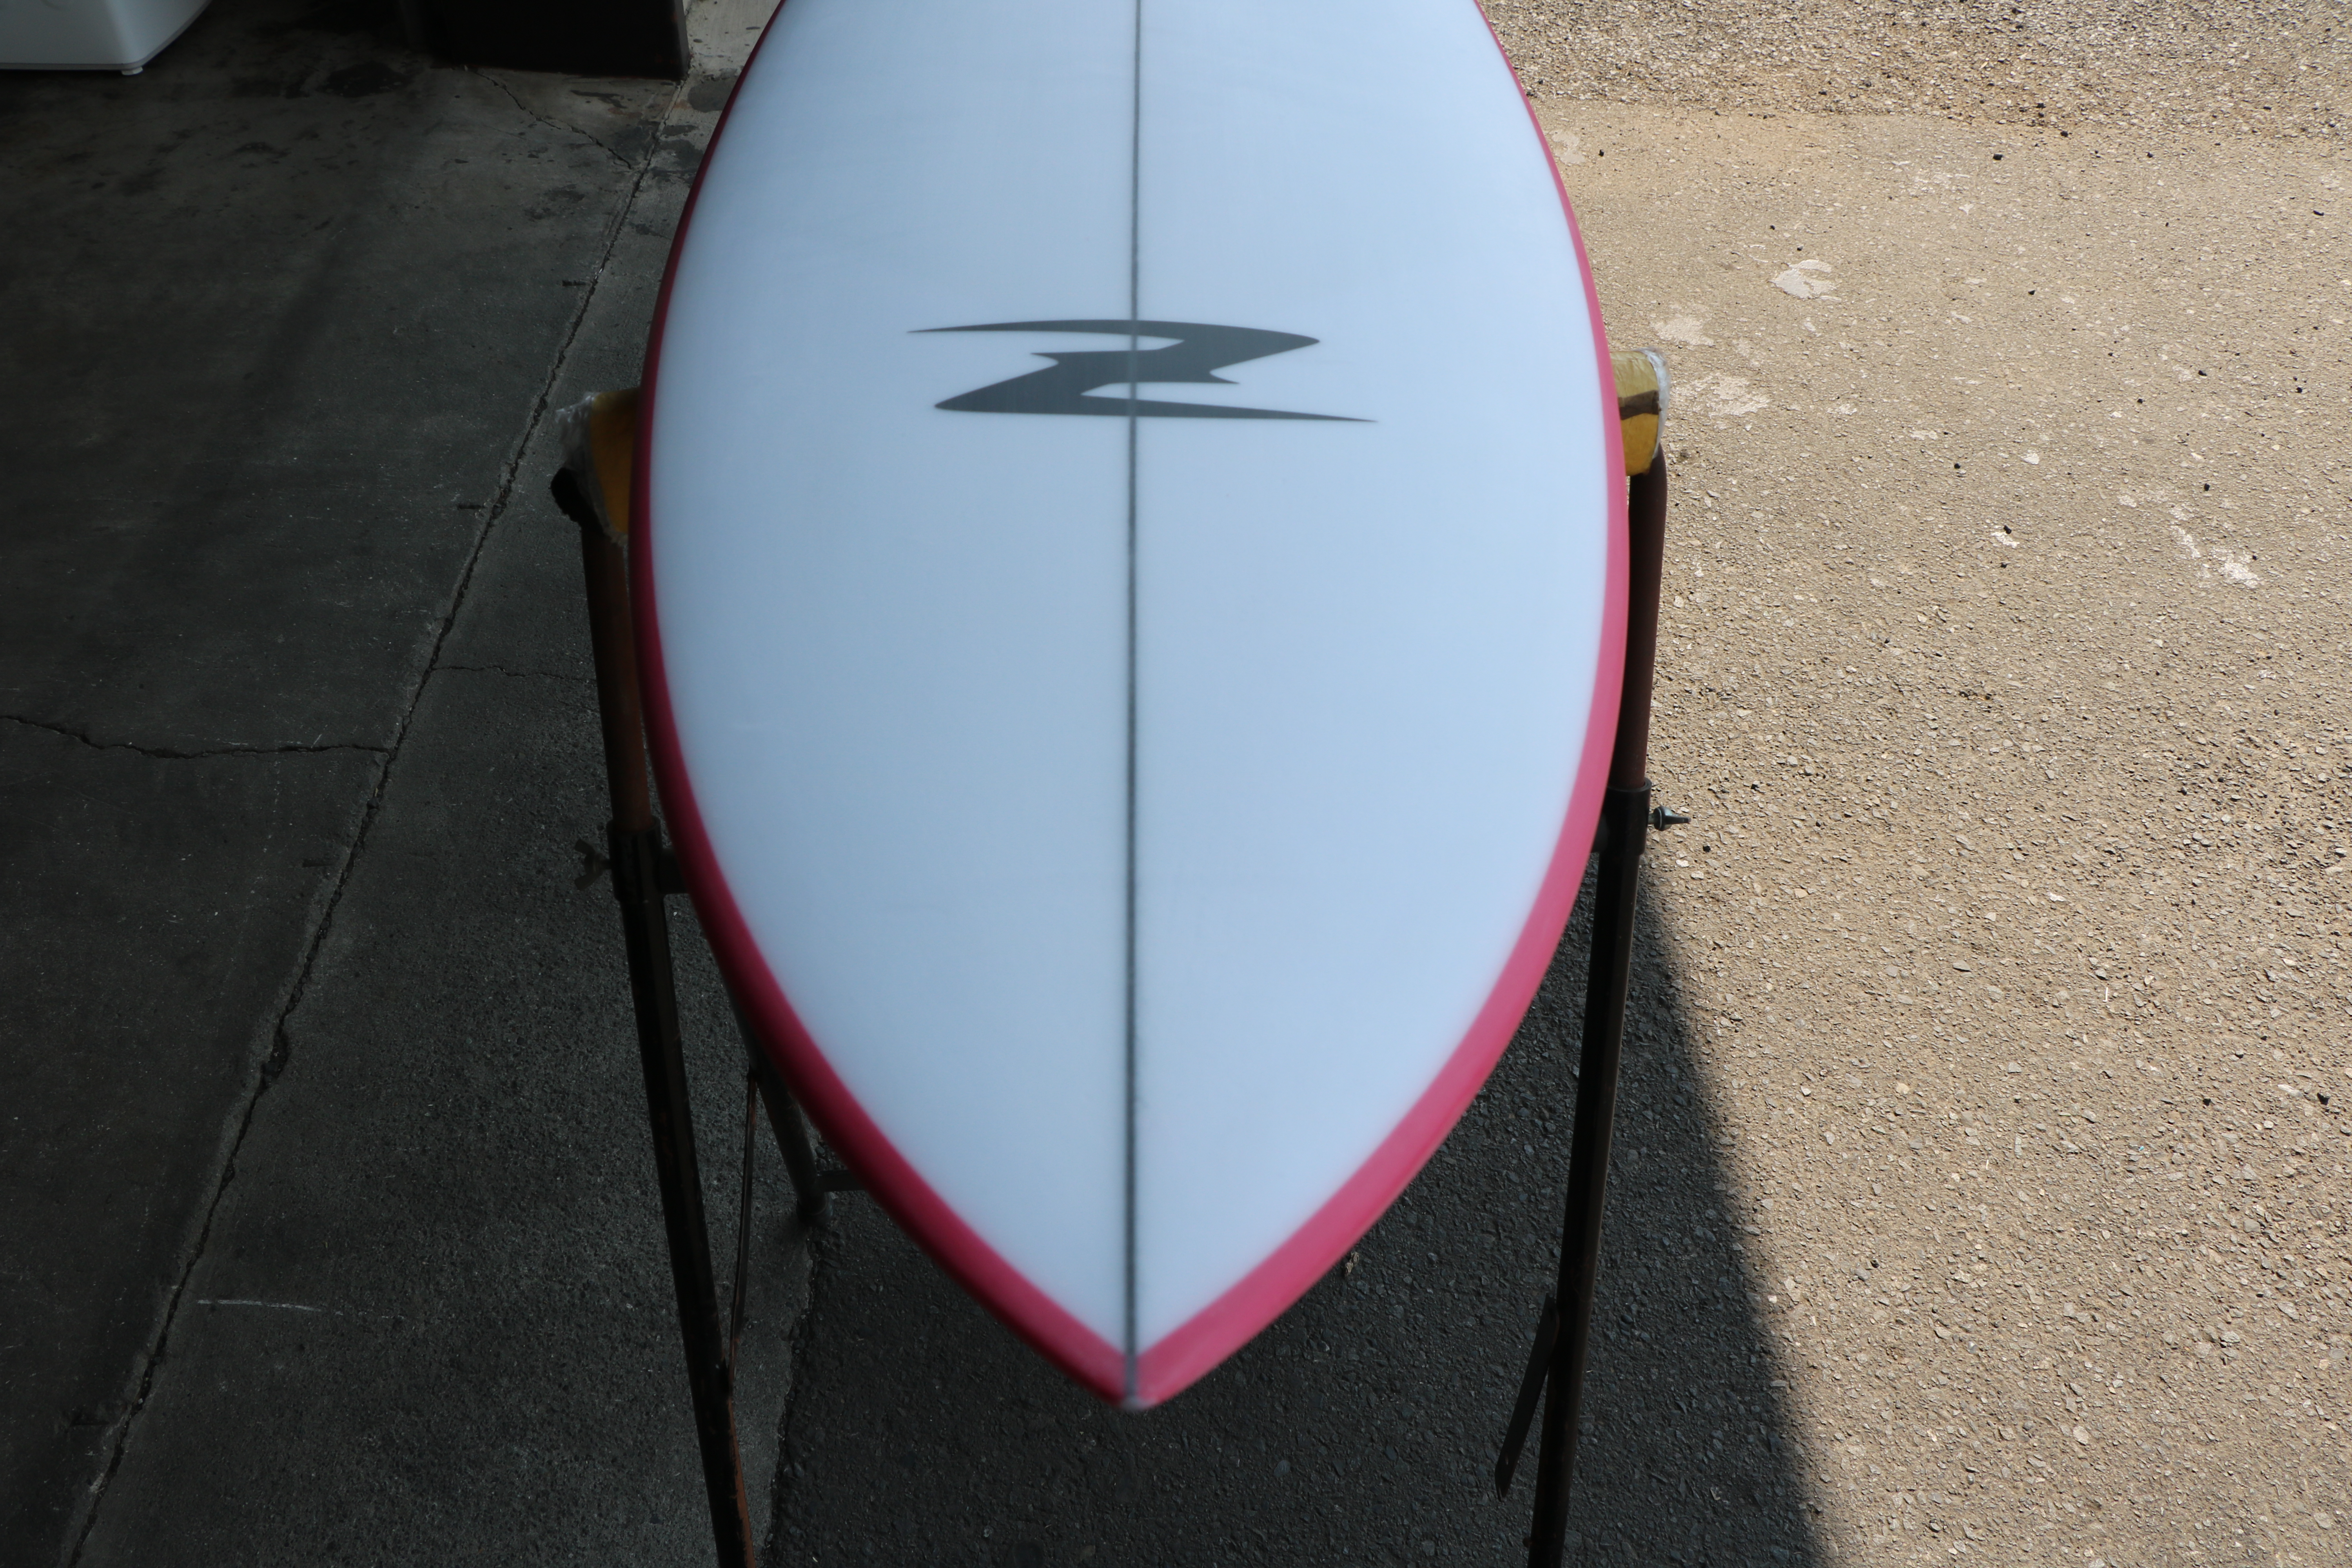 2020 New Model “AURORA” – ZBURH CUSTOM SURFBOARDS